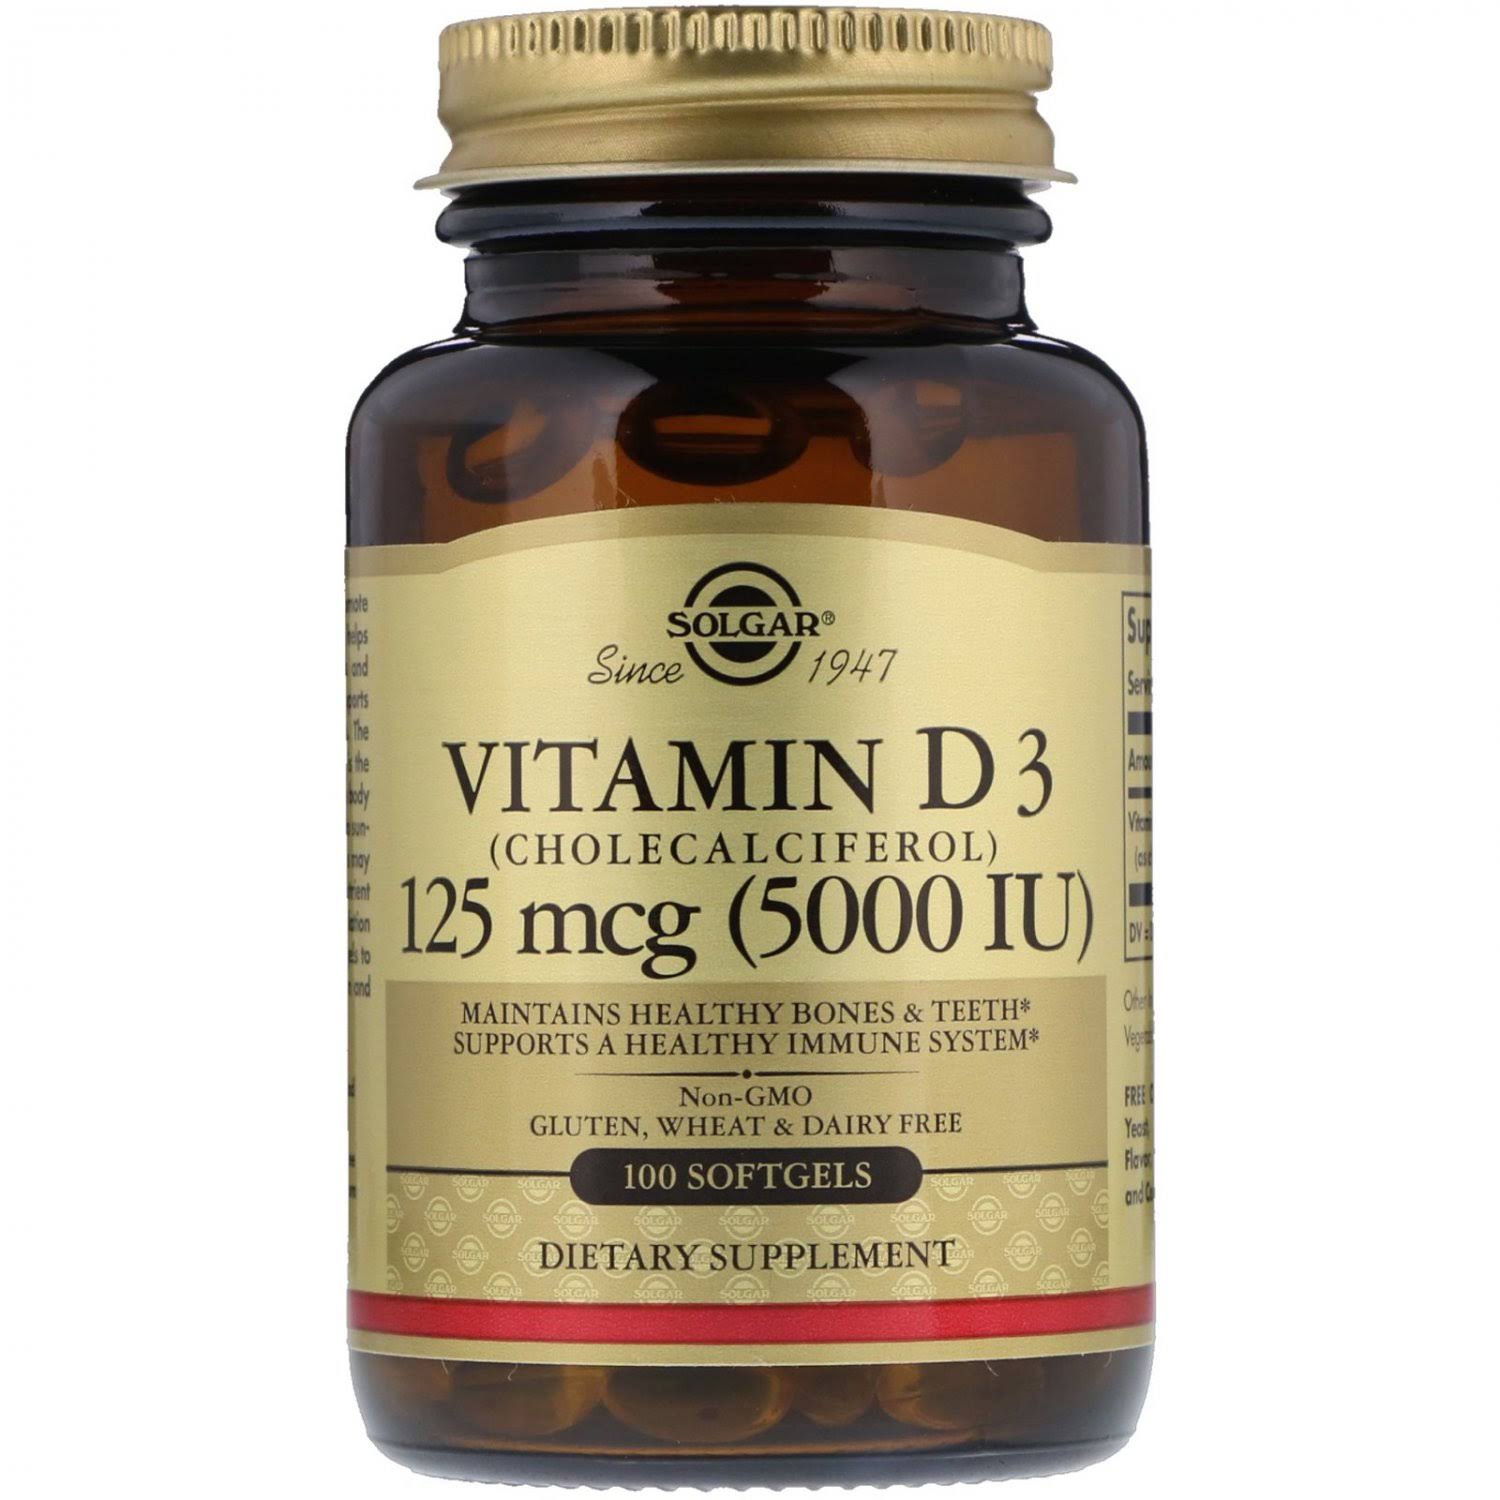 Solgar Vitamin D3 Cholecalciferol 5000 IU Dietary Supplement - 100 Softgels